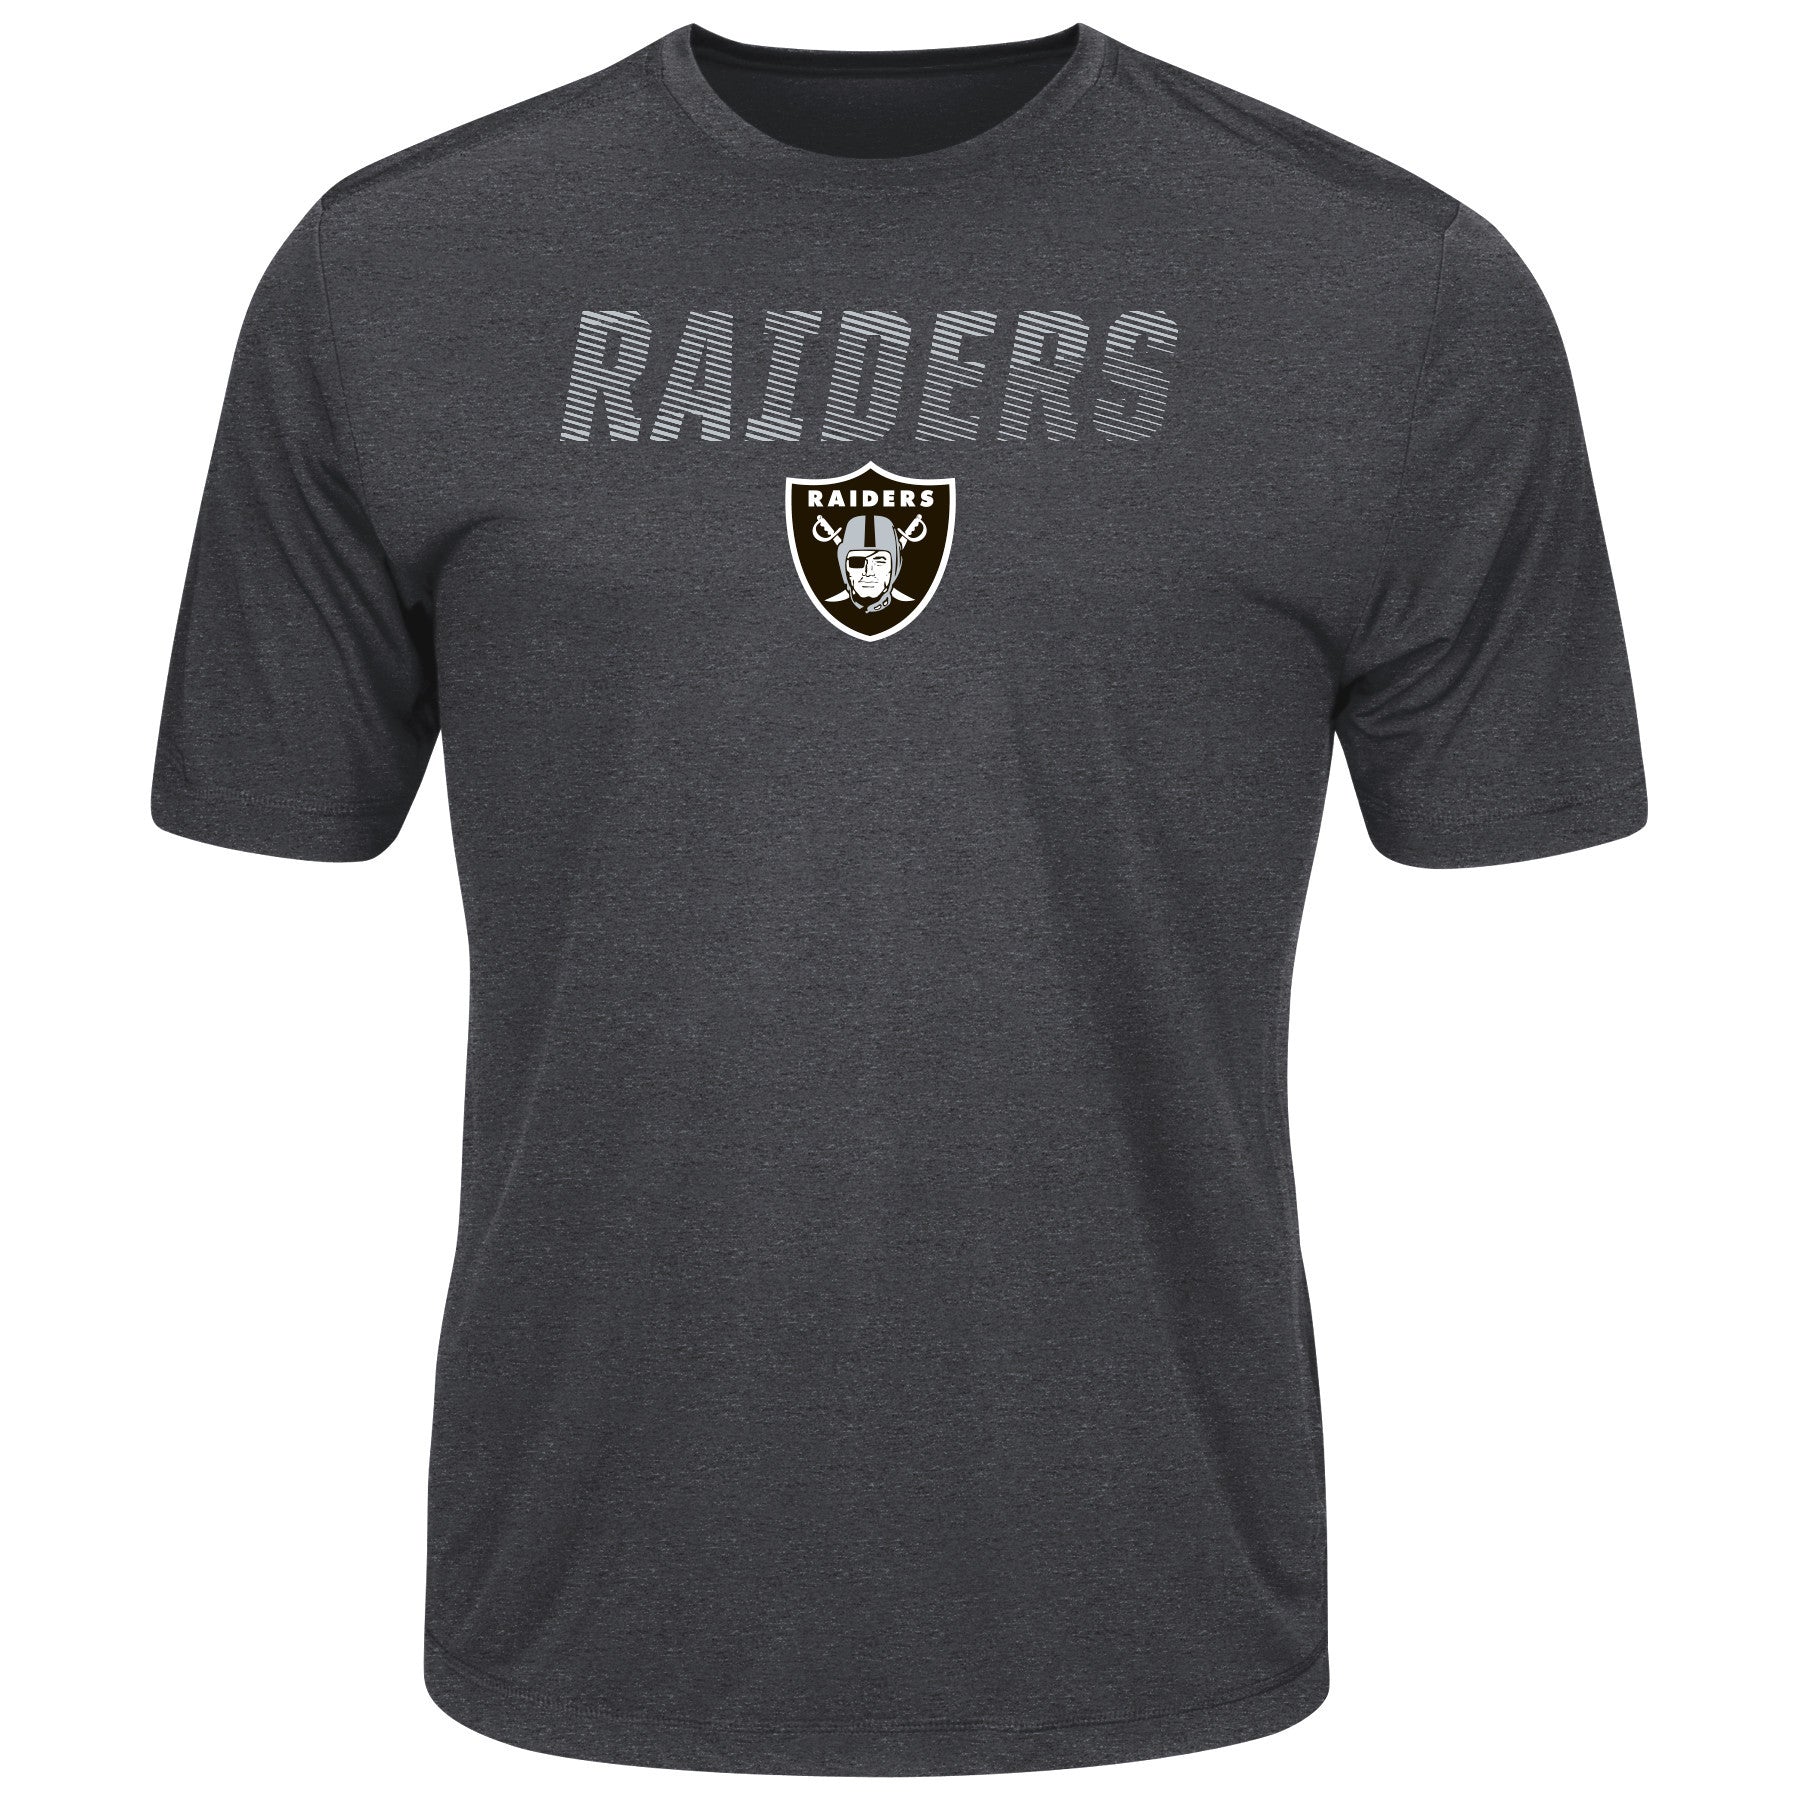 Oakland Raiders All The Way T-Shirt 